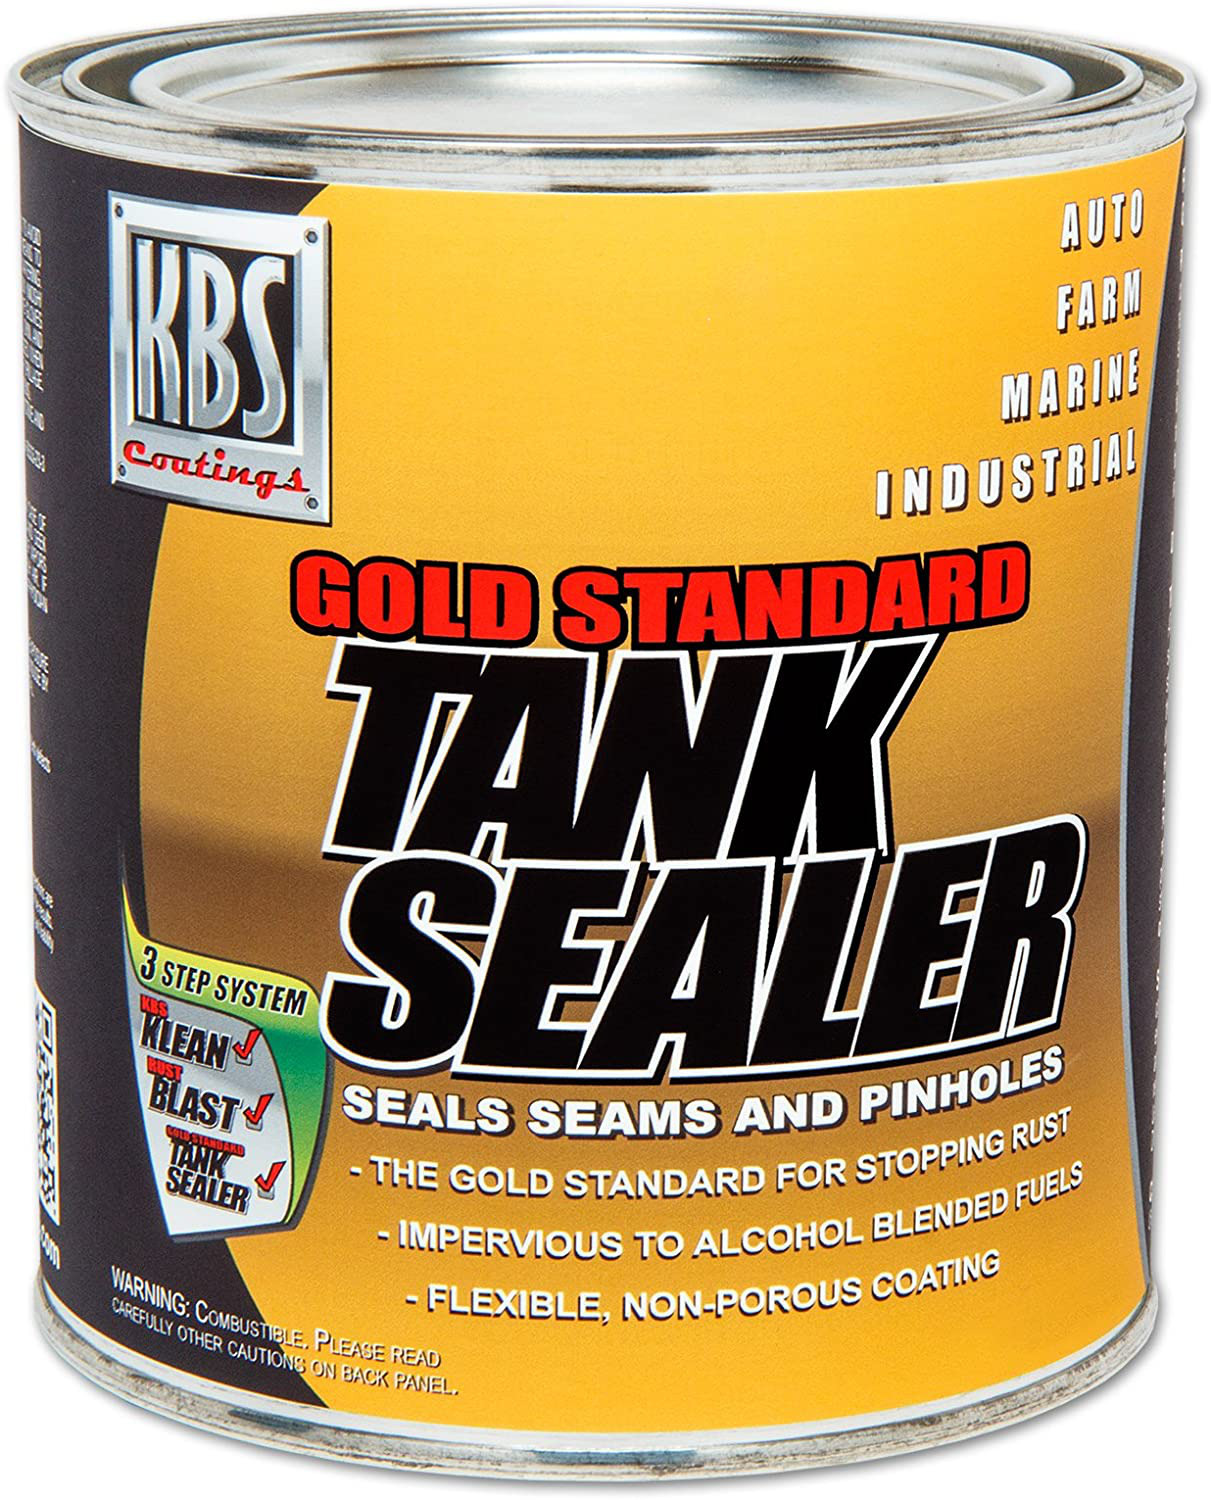 KBS Coatings 5300 Gold Standard Tank Sealer. Seals Seams and Pinholes 1 Pint